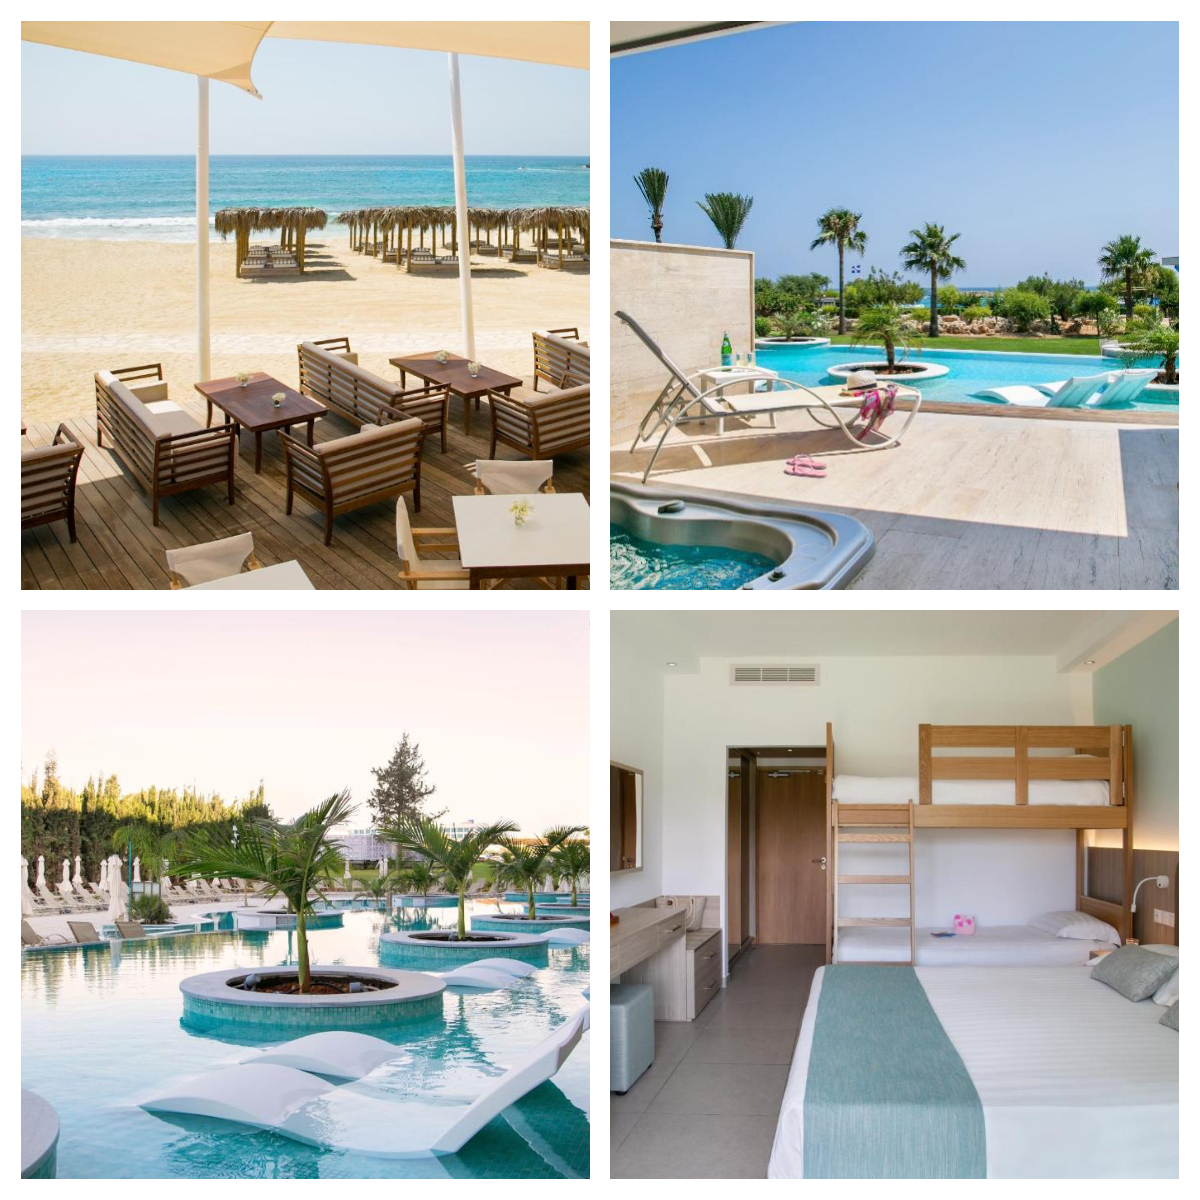 Asterias Beach Hotel in Cyprus